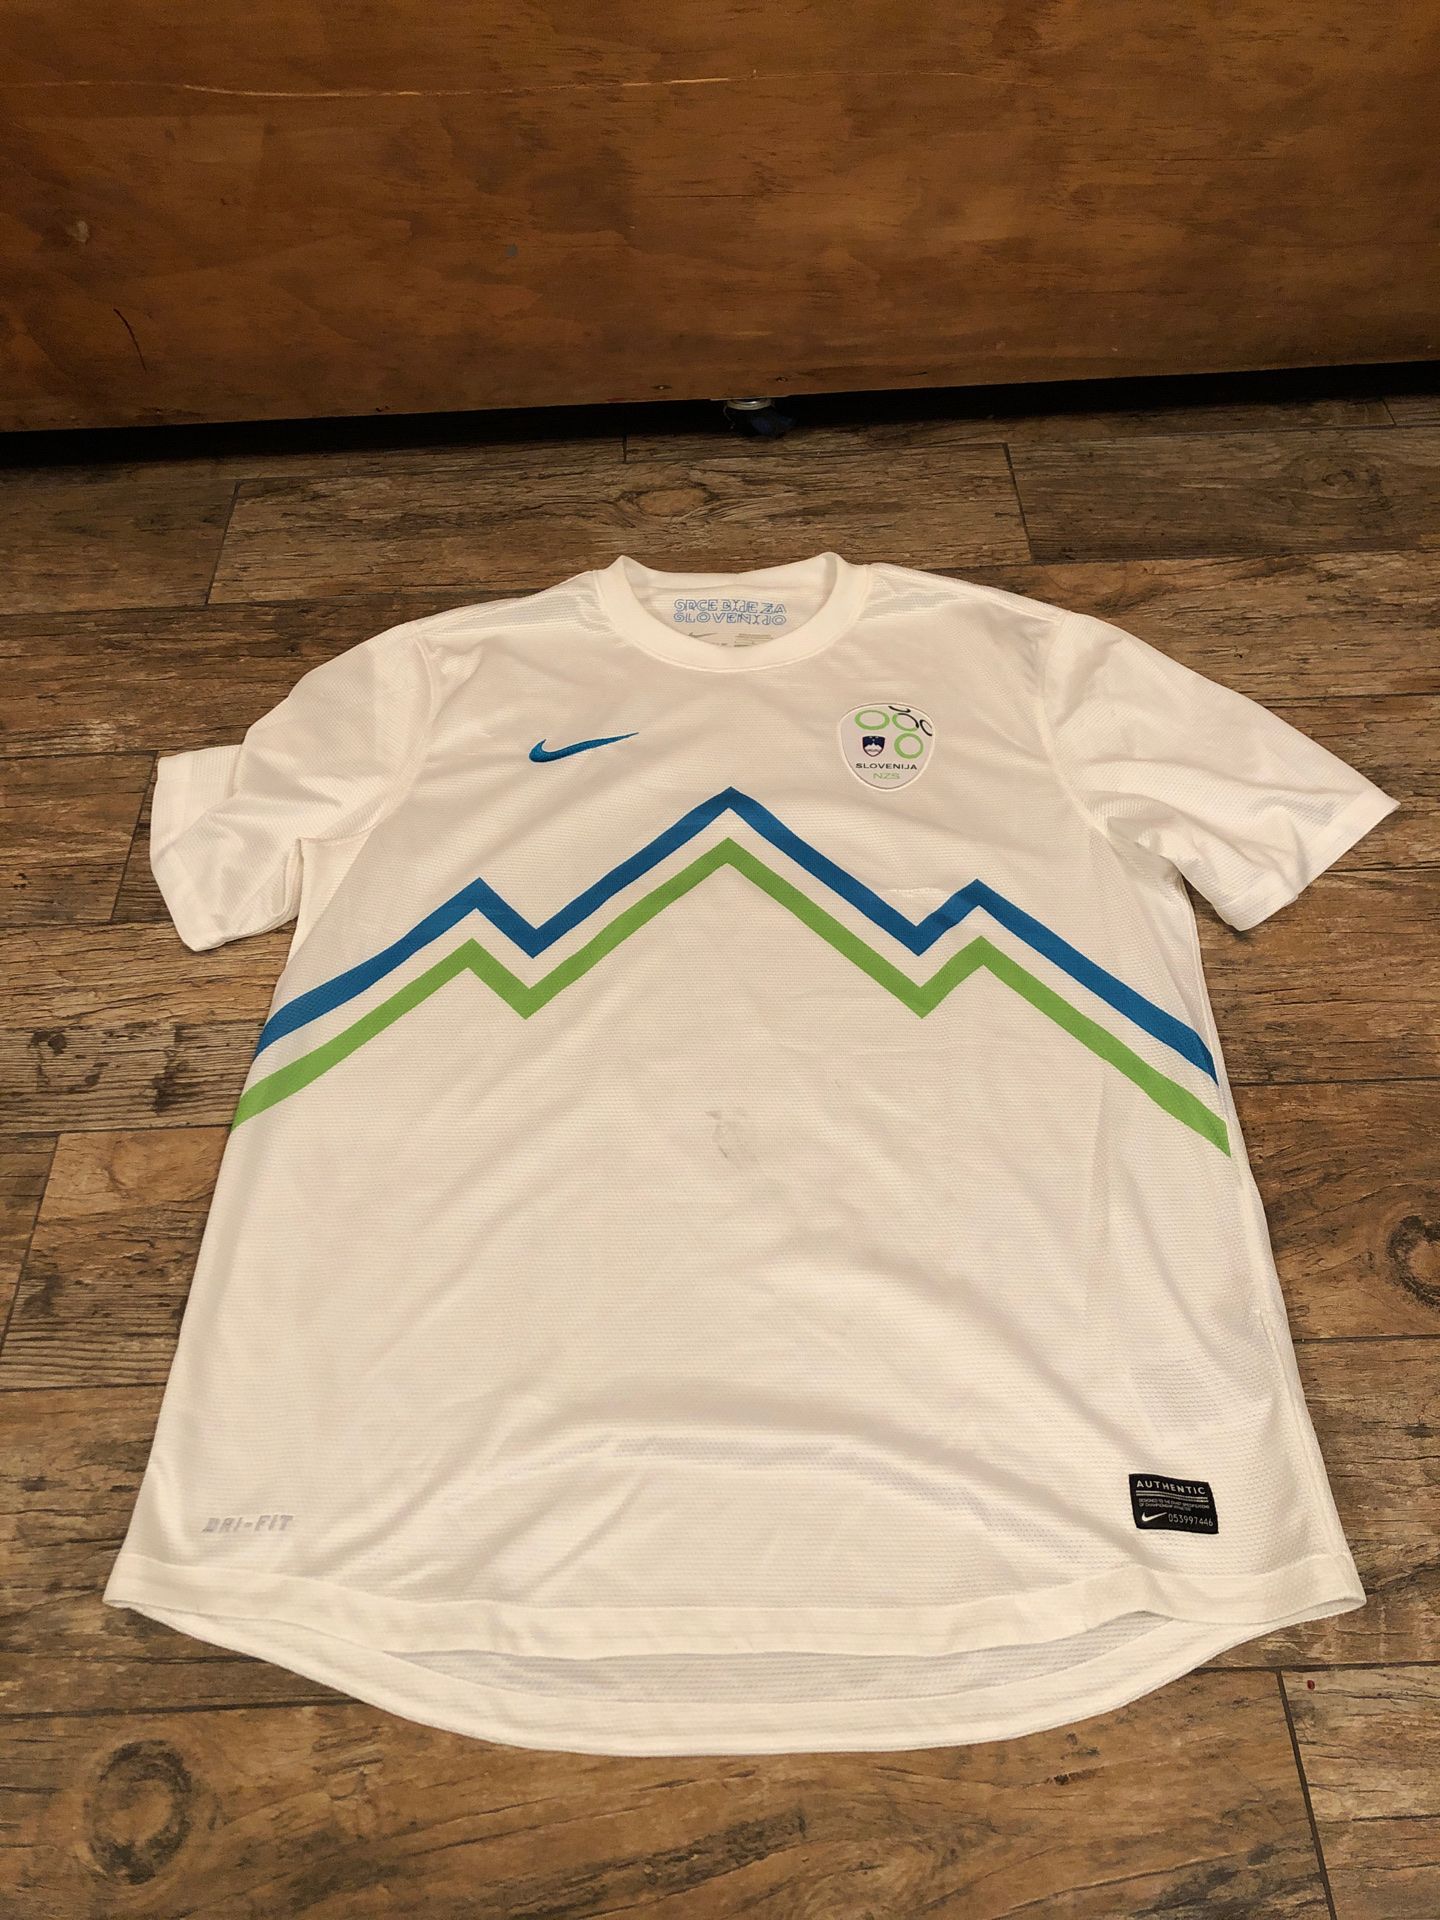 Slovenija Nike soccer football jersey size large